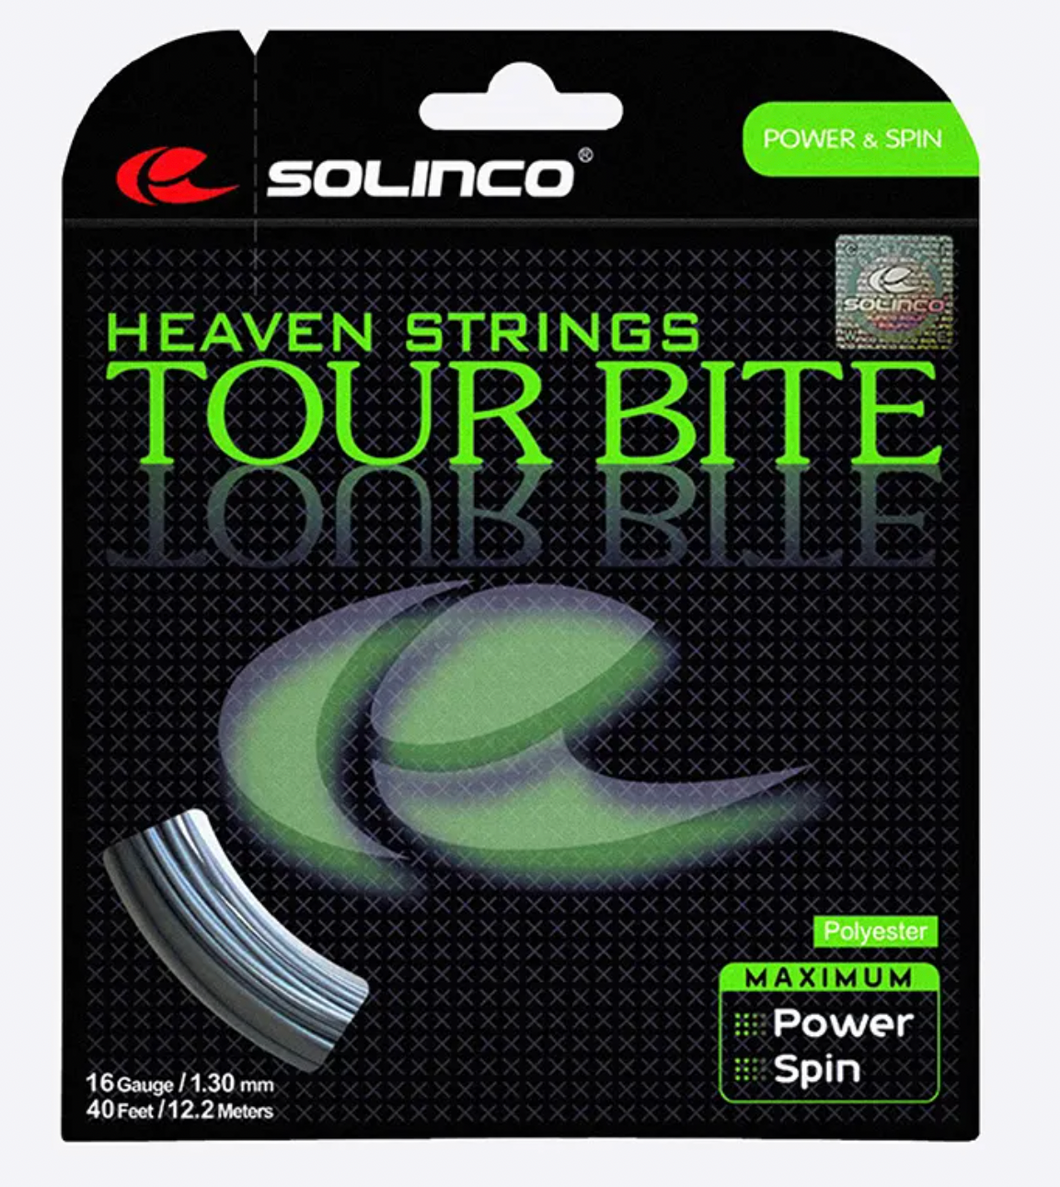 Solinco Tour Bite Tennis String - I LOVE MY DOUBLES PARTNER!!!